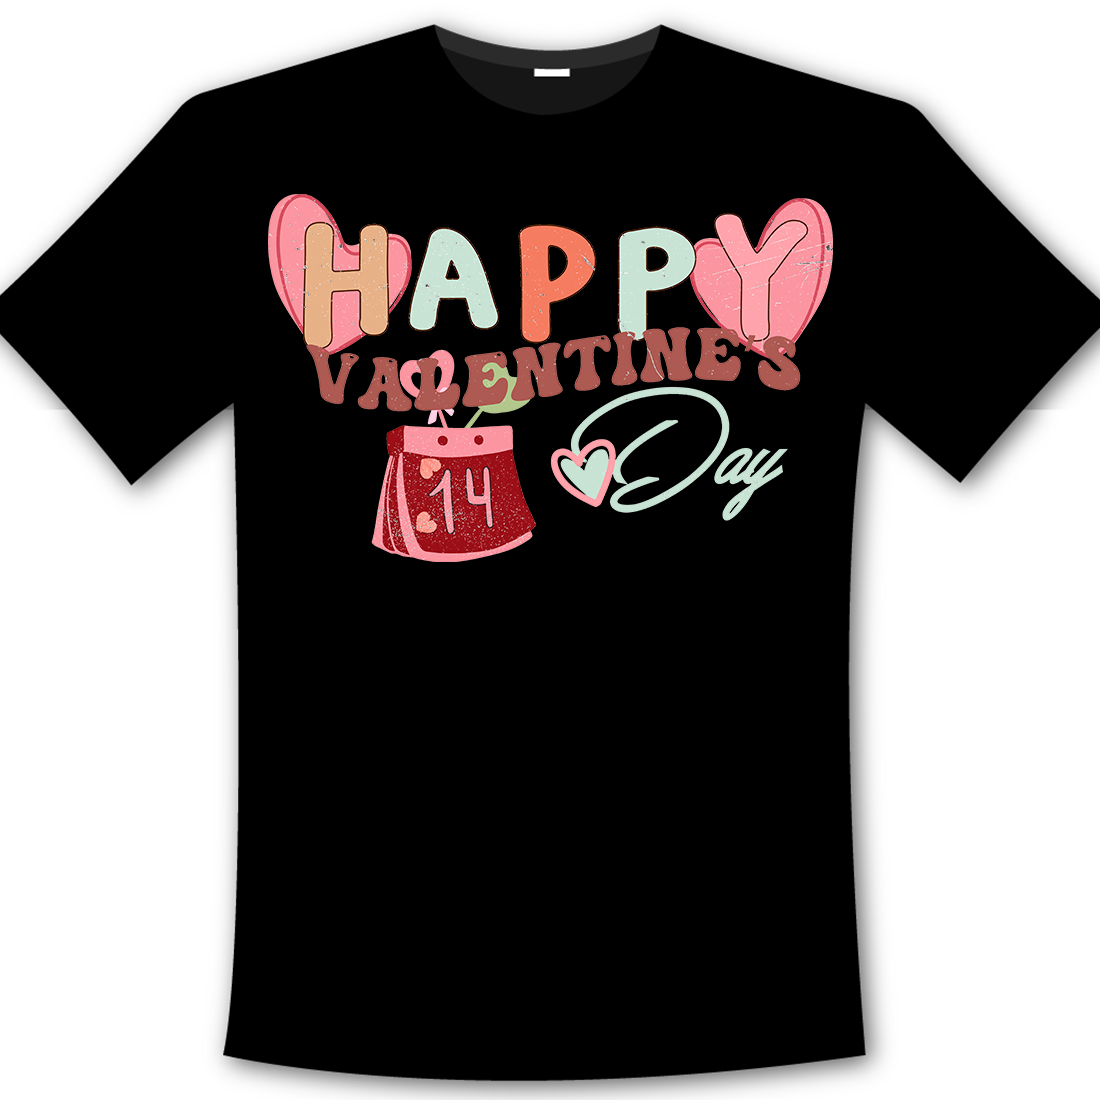 Retro Valentine’s Day T-Shirt Design cover image.